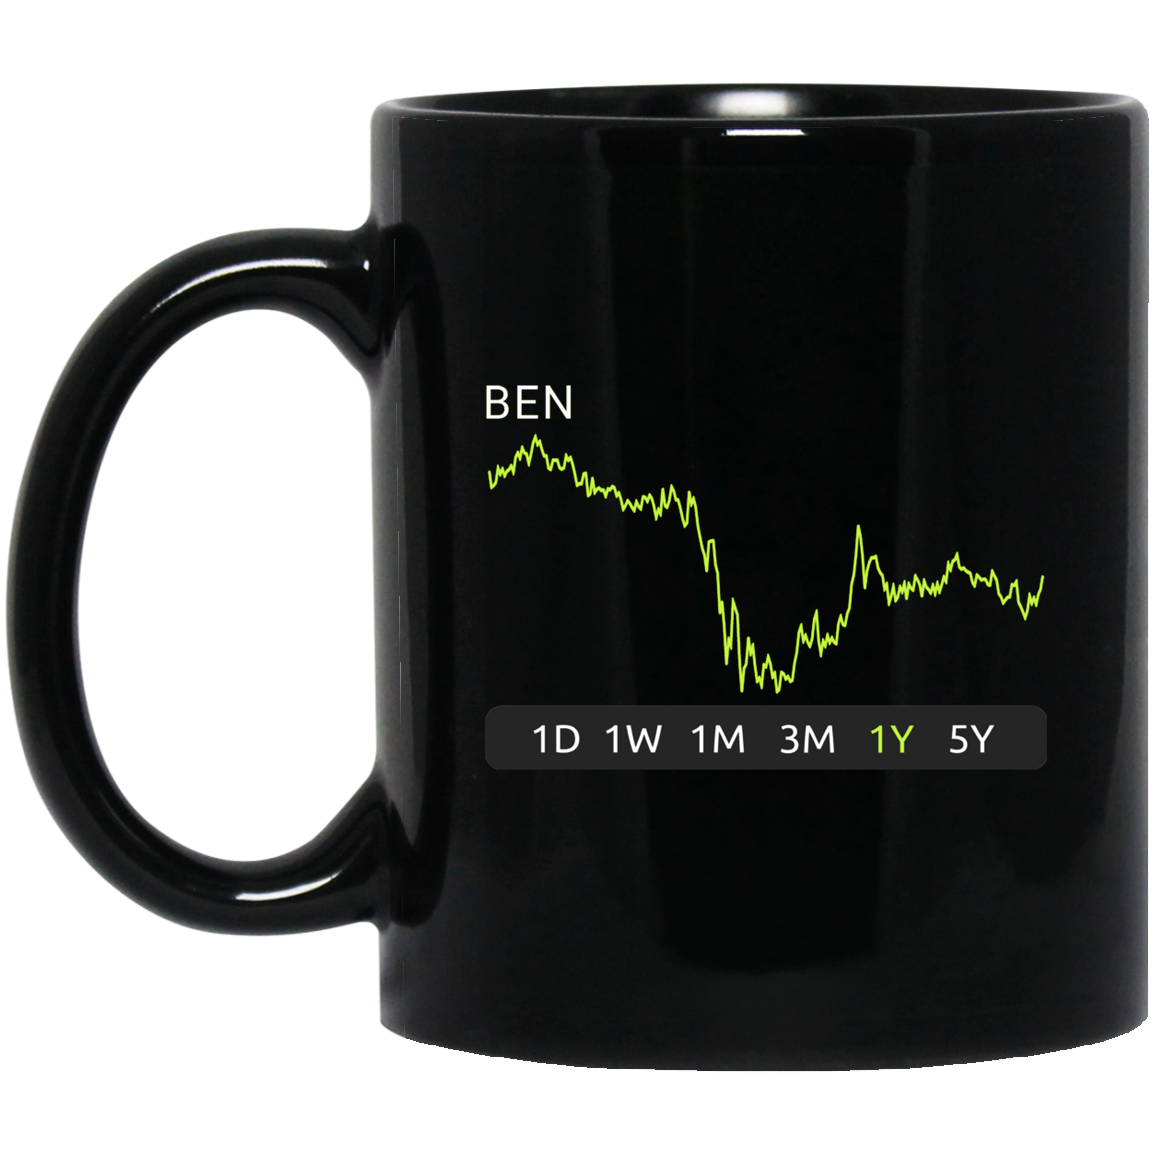 BEN Stock 1y Mug